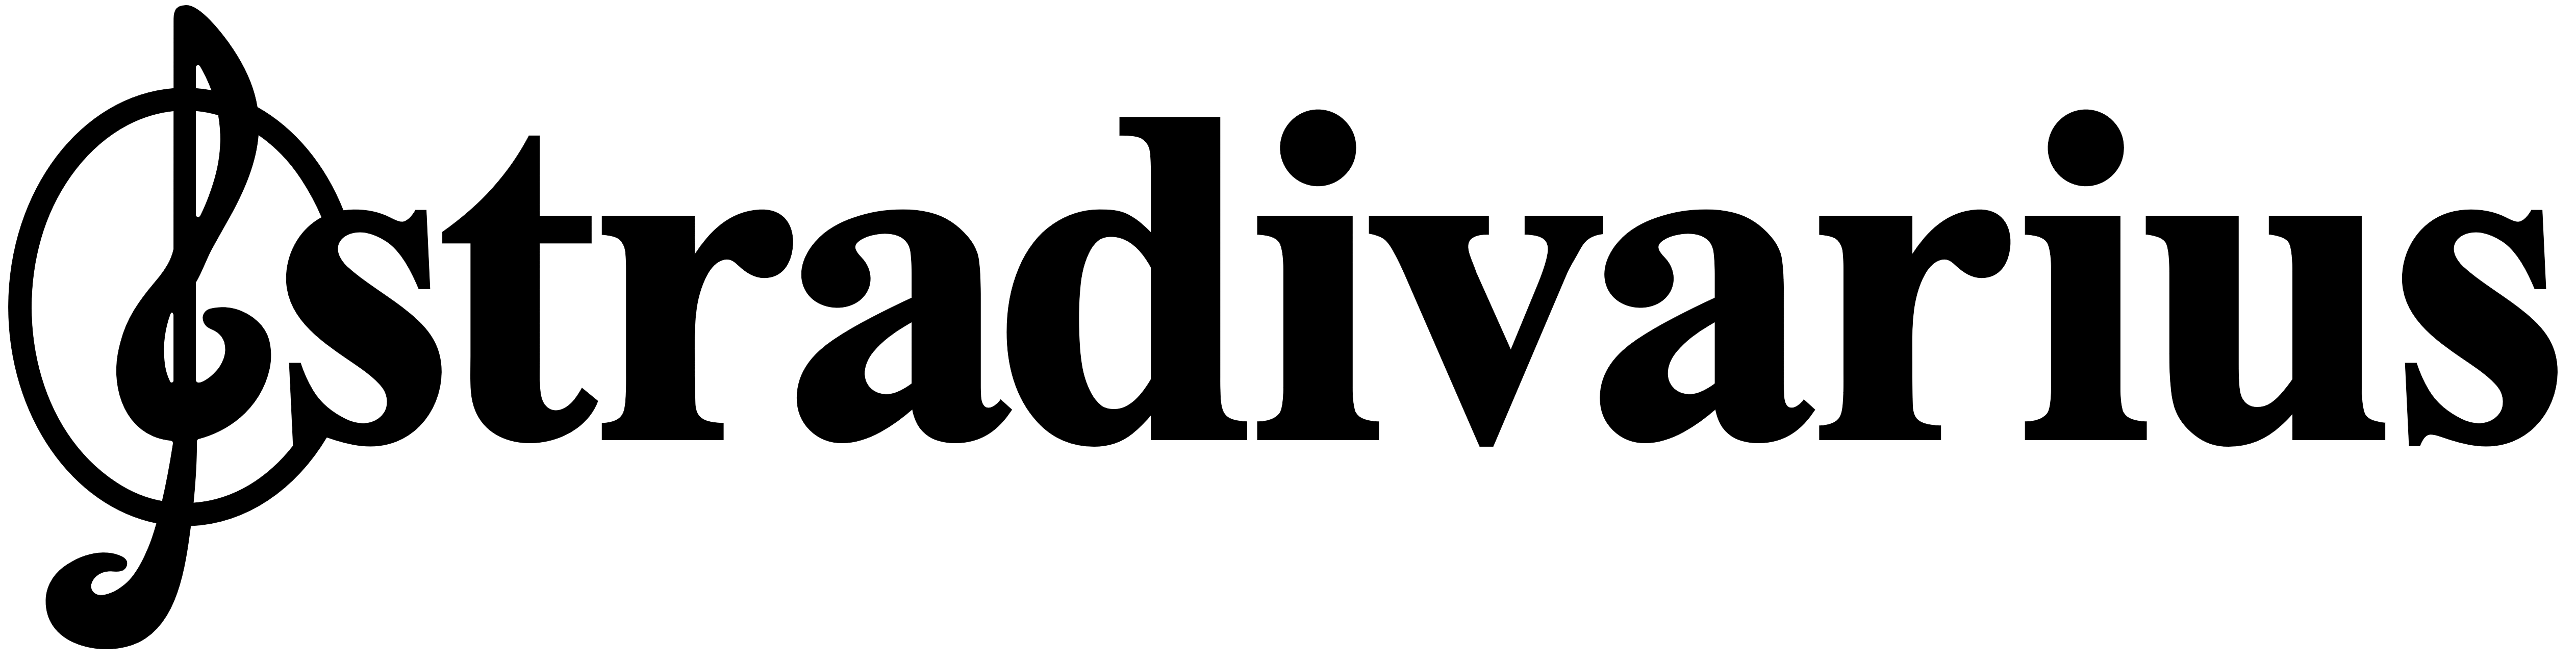 Stradivarius Logo - Stradivarius – Logos Download